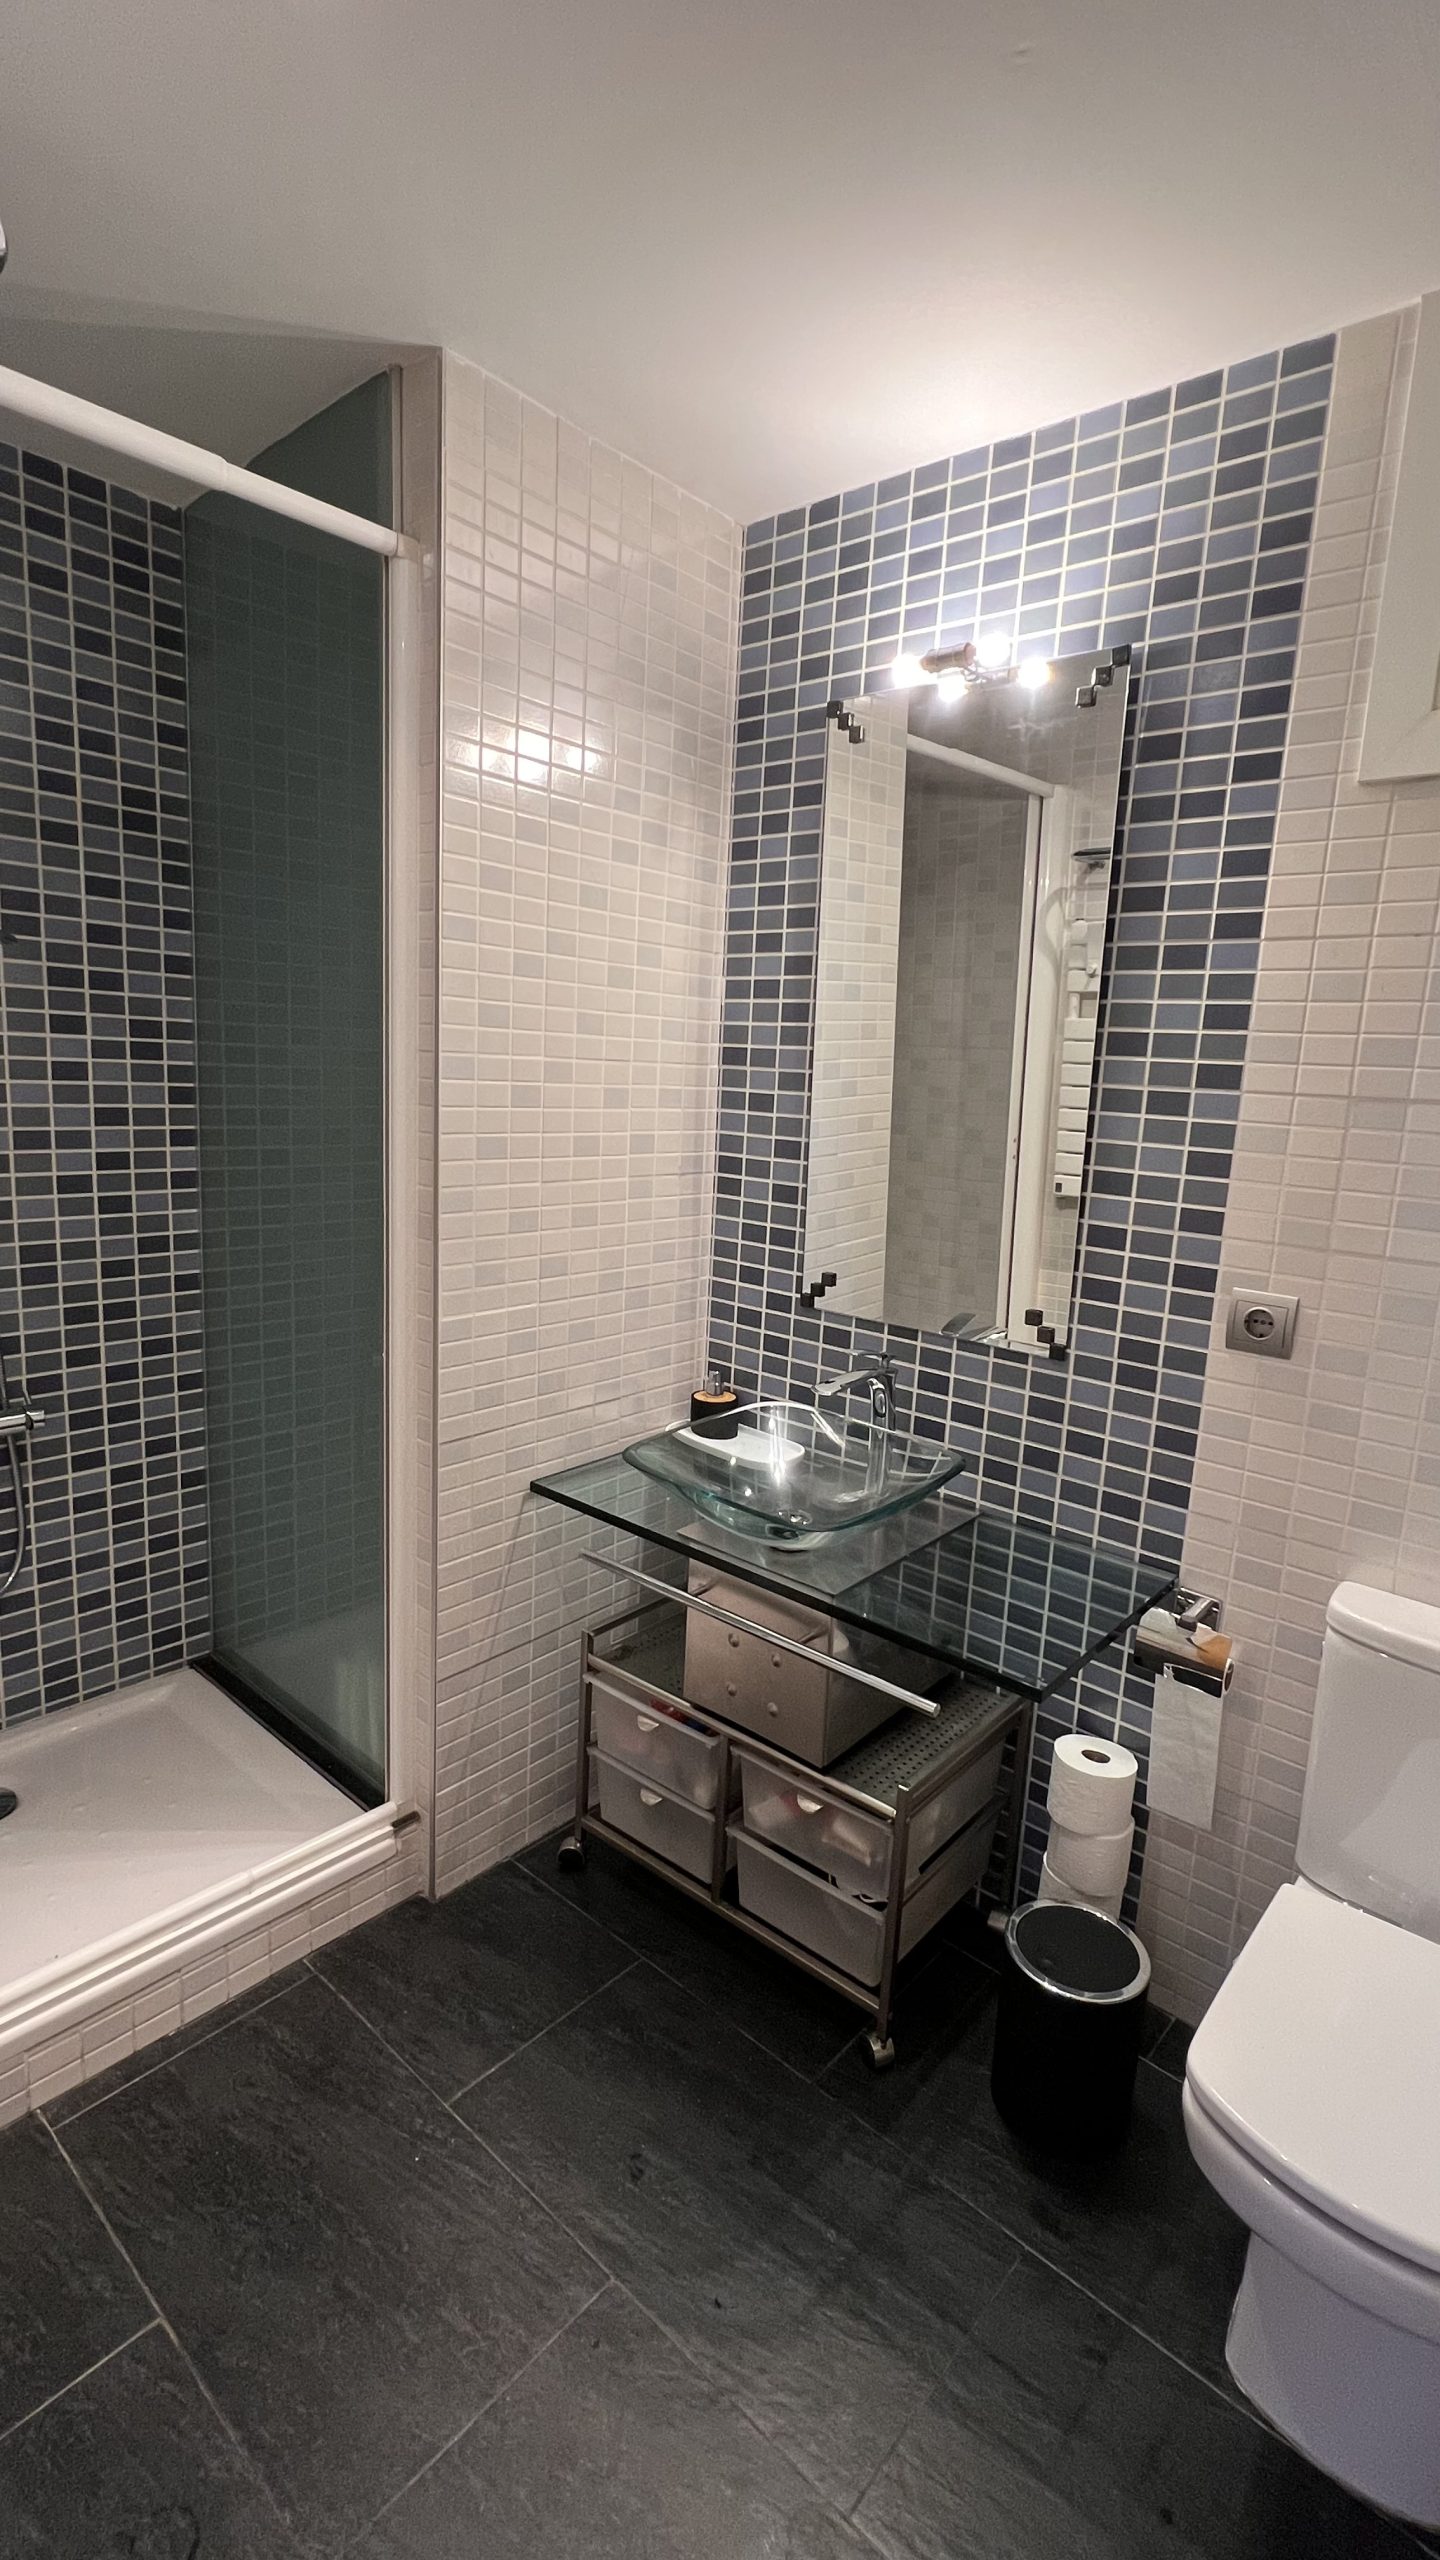 apartment for rent in Alicante - bathroom